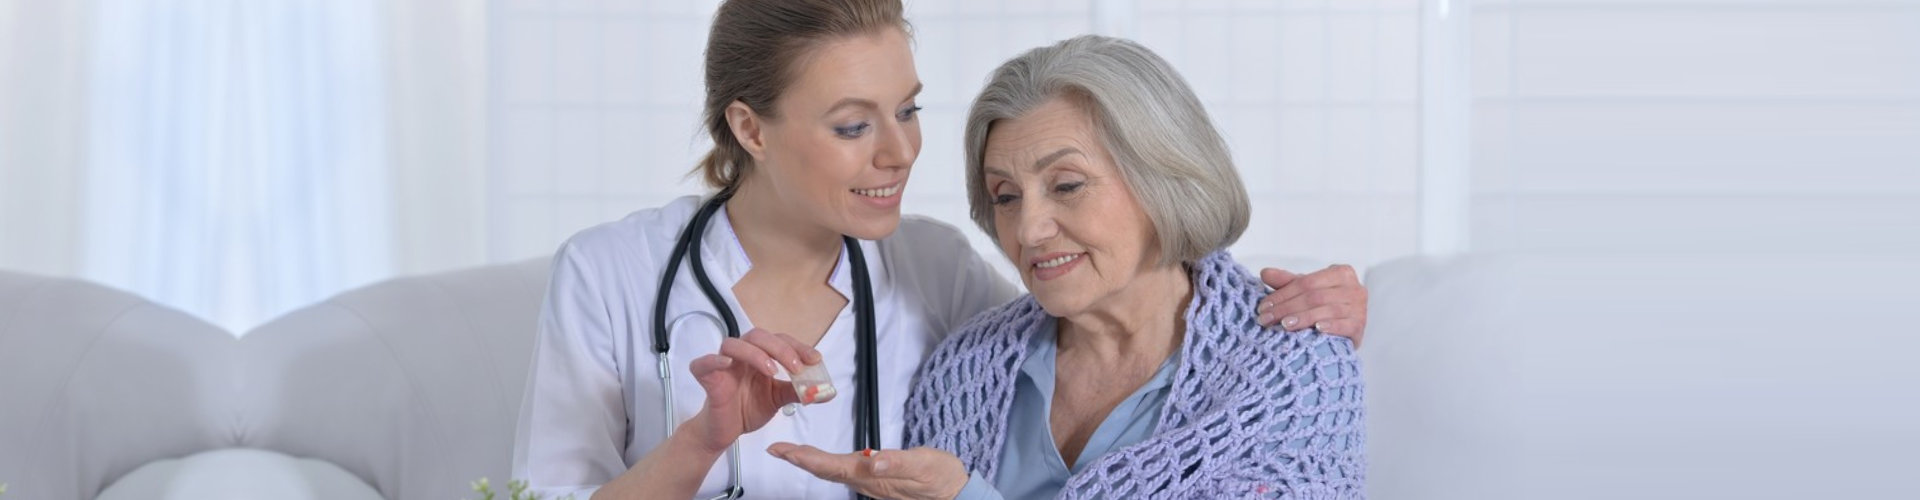 caregiver giving medicine to senior woman